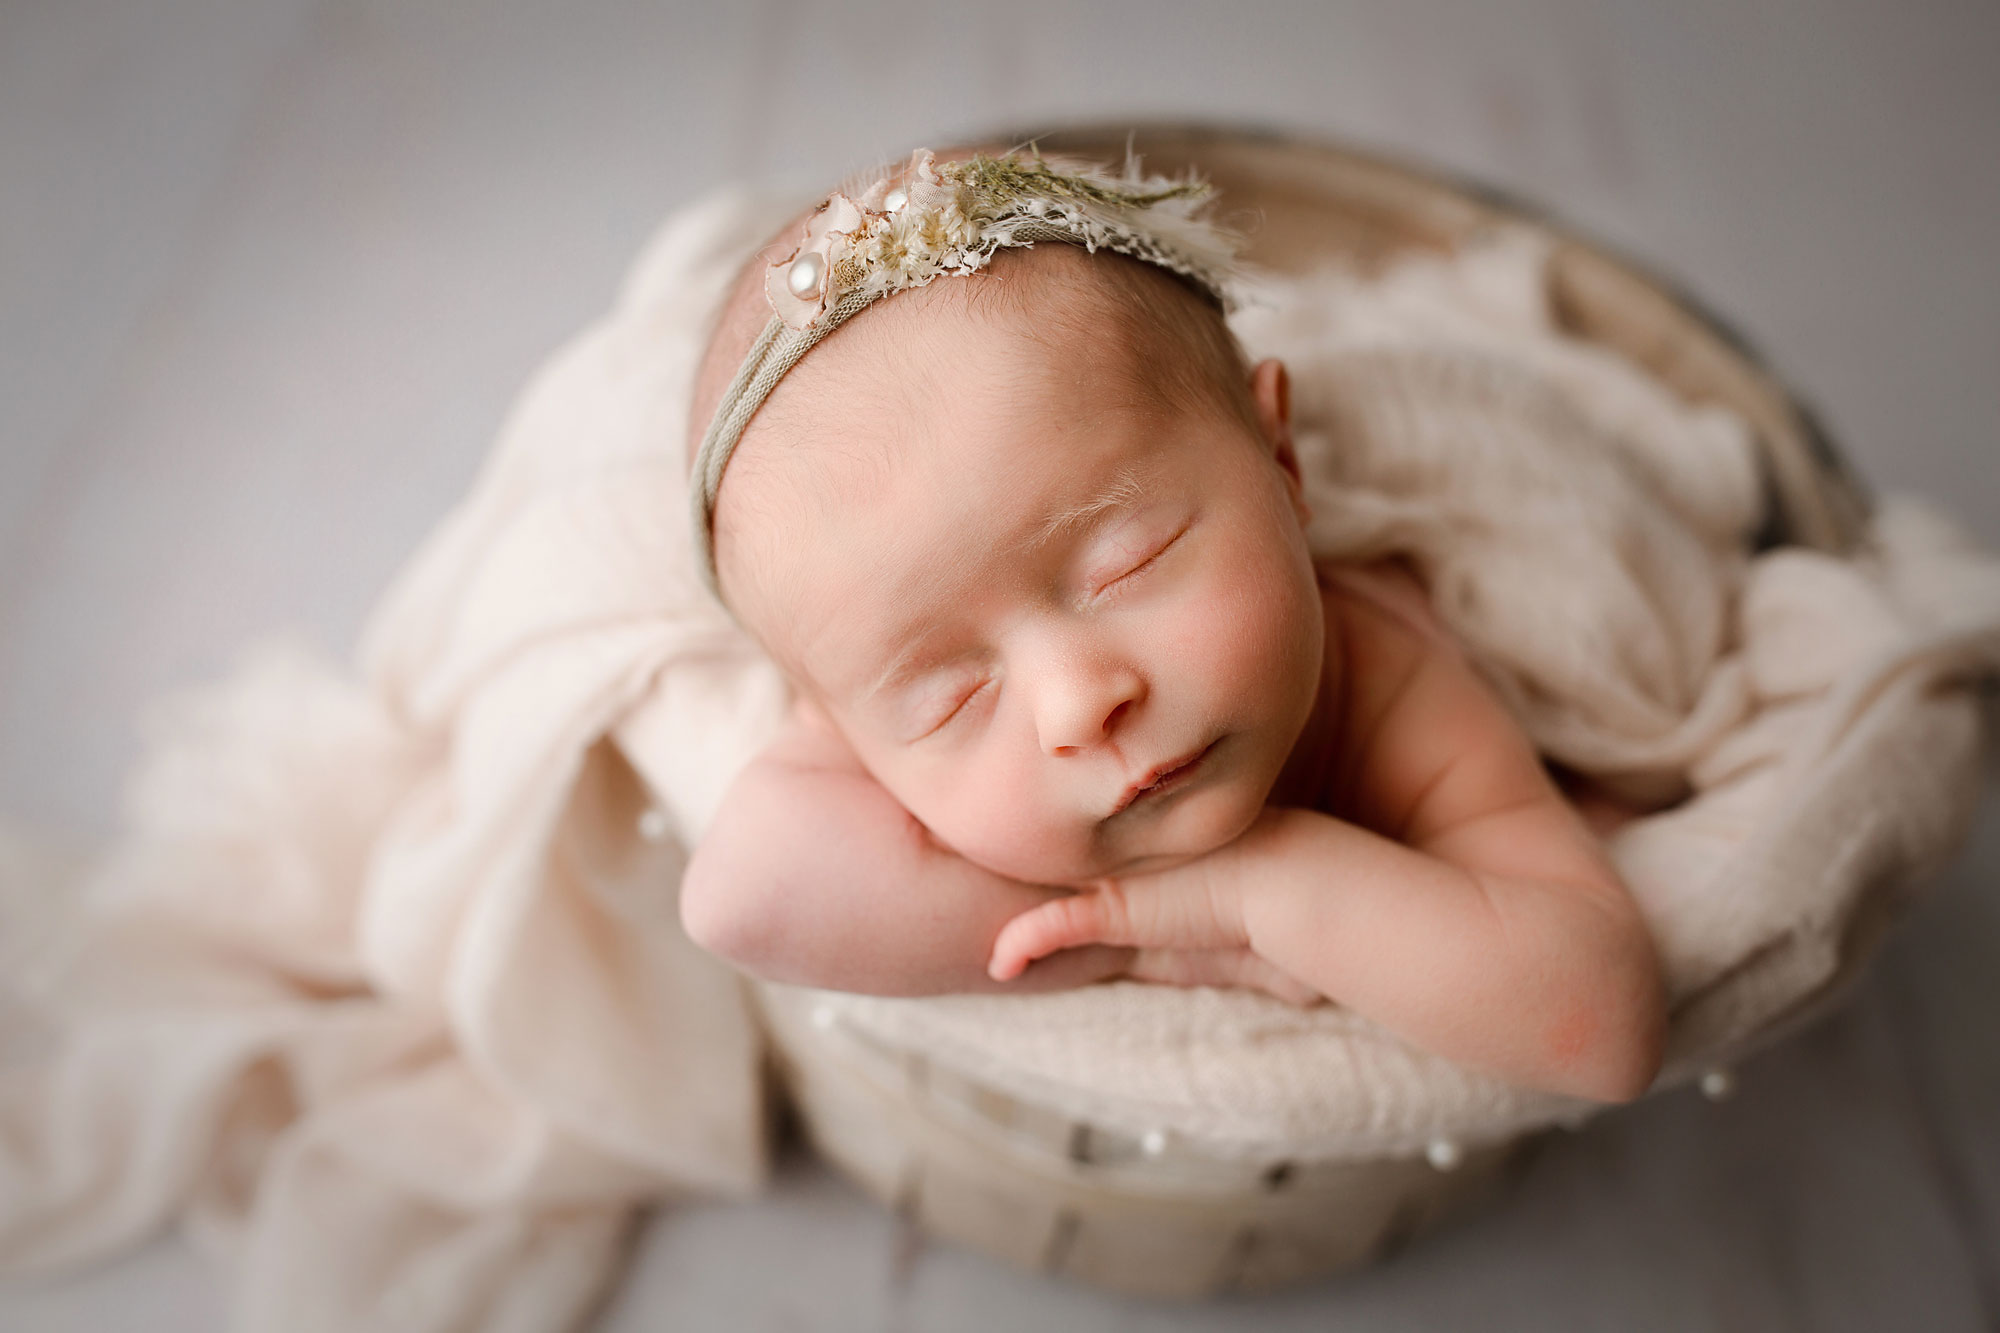 newborn baby sleeping in a bucket Readington NJ newborn photo session